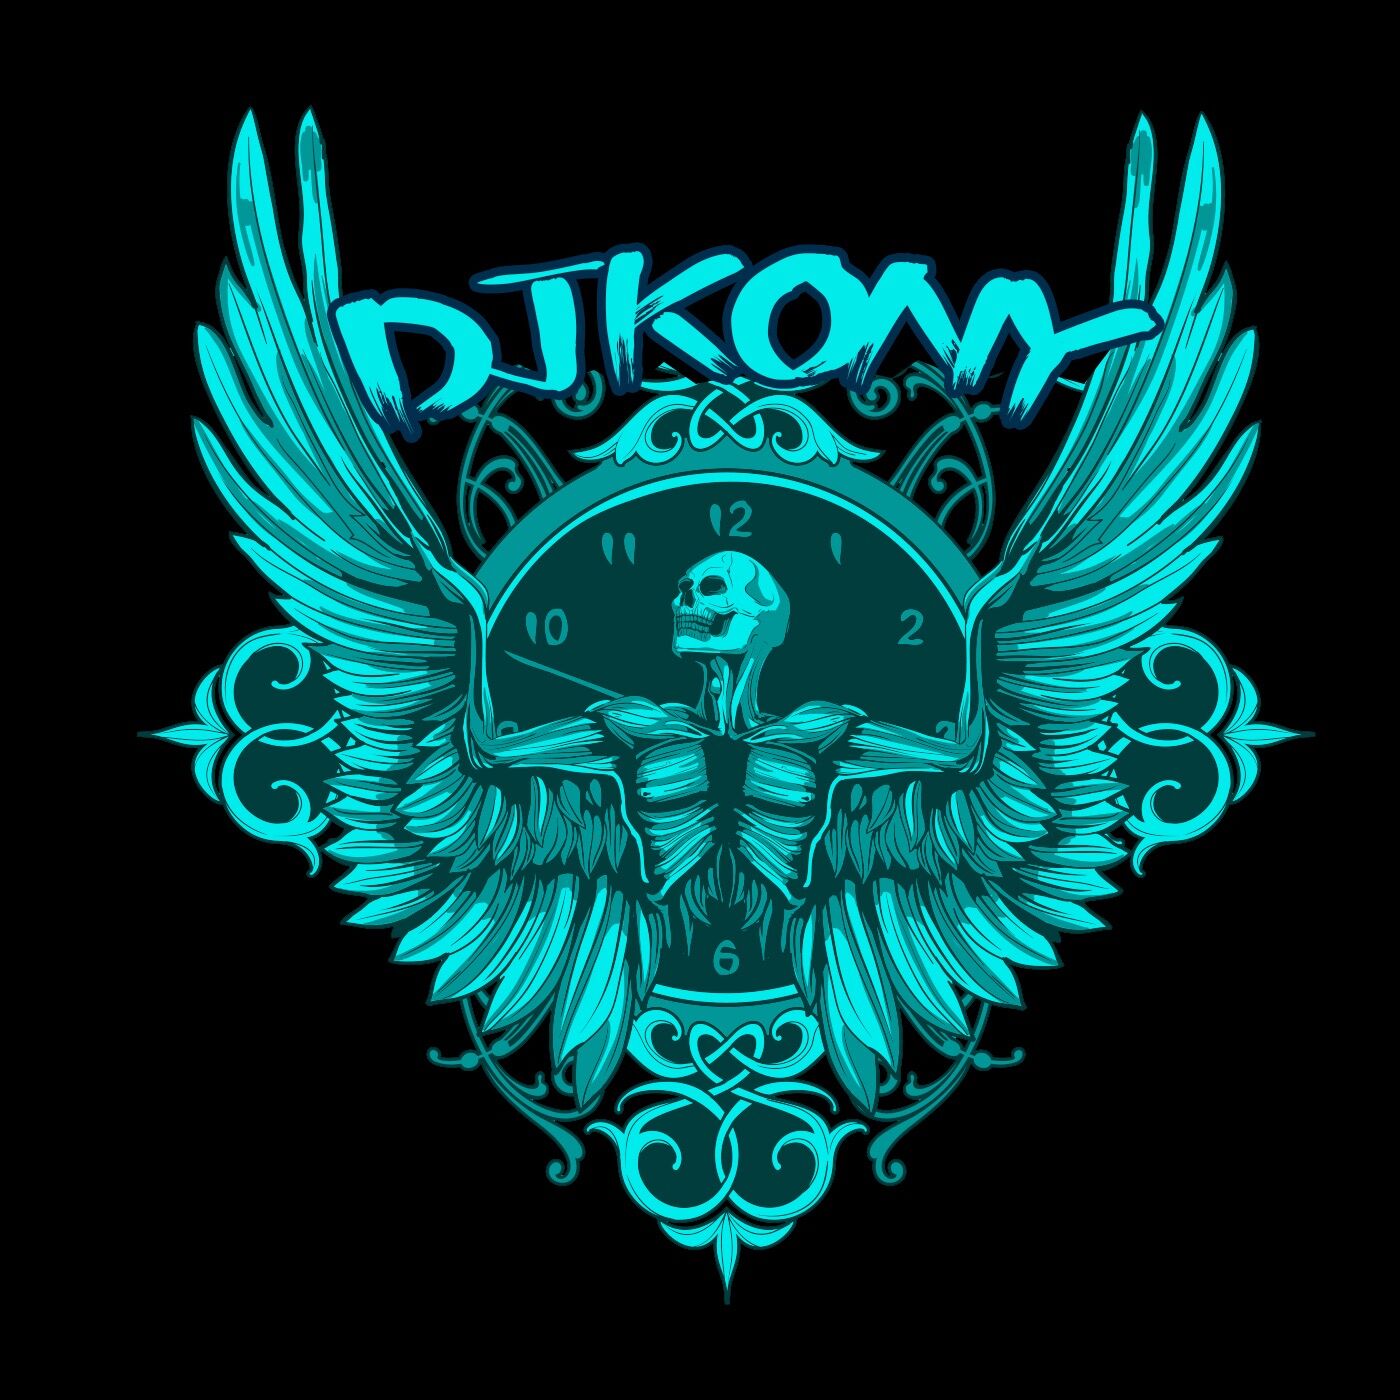 [06.14] DJKONY bigroom Hardstyle主场套曲